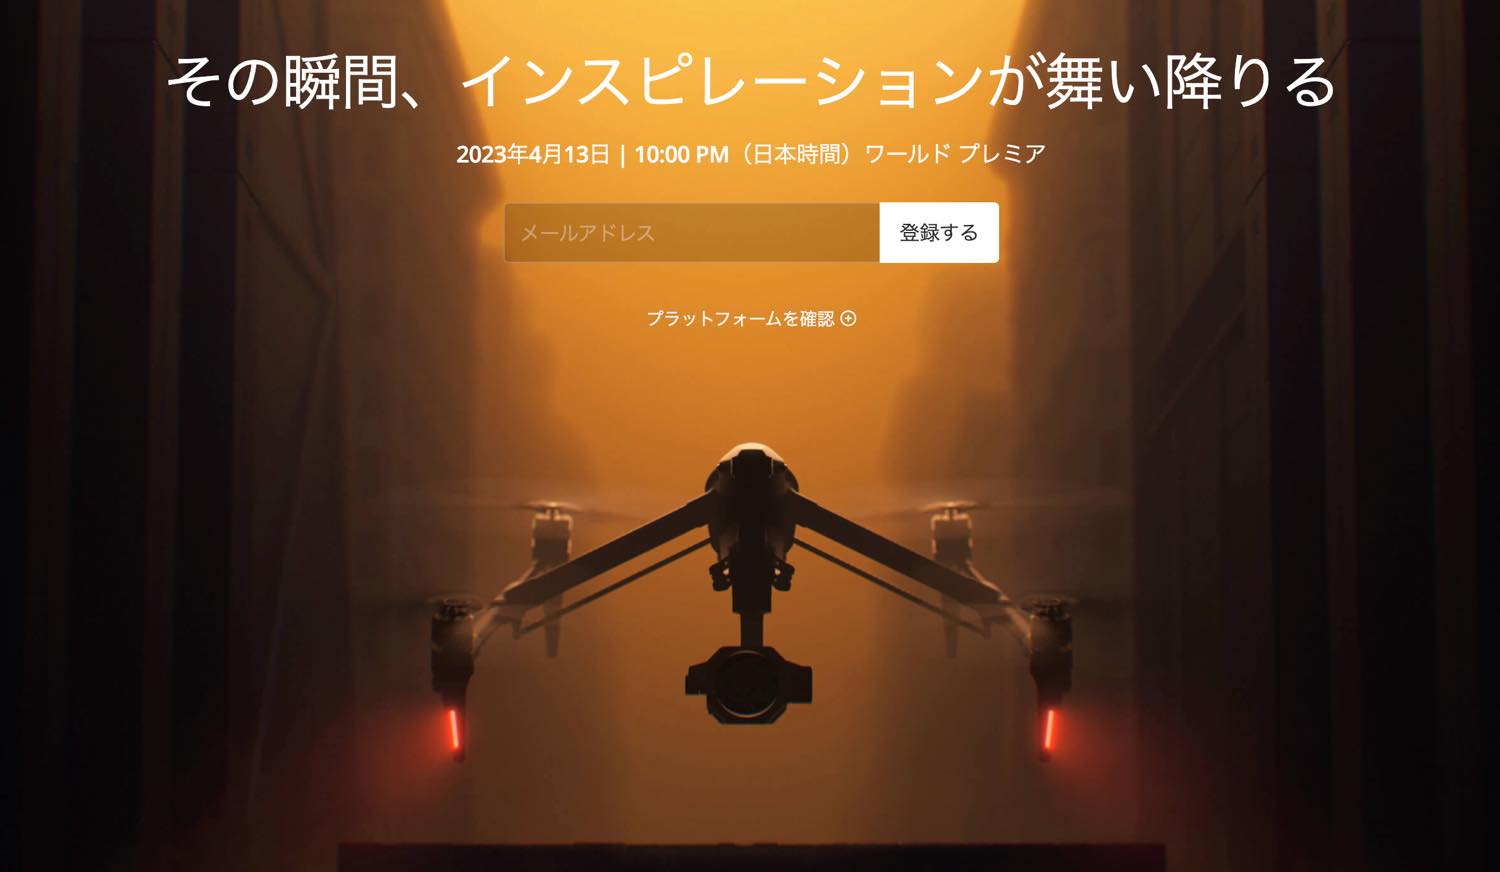 DJI、映像制作用ドローン｢Inspire｣シリーズの最新モデル｢Inspire 3｣を4月13日に発表へ